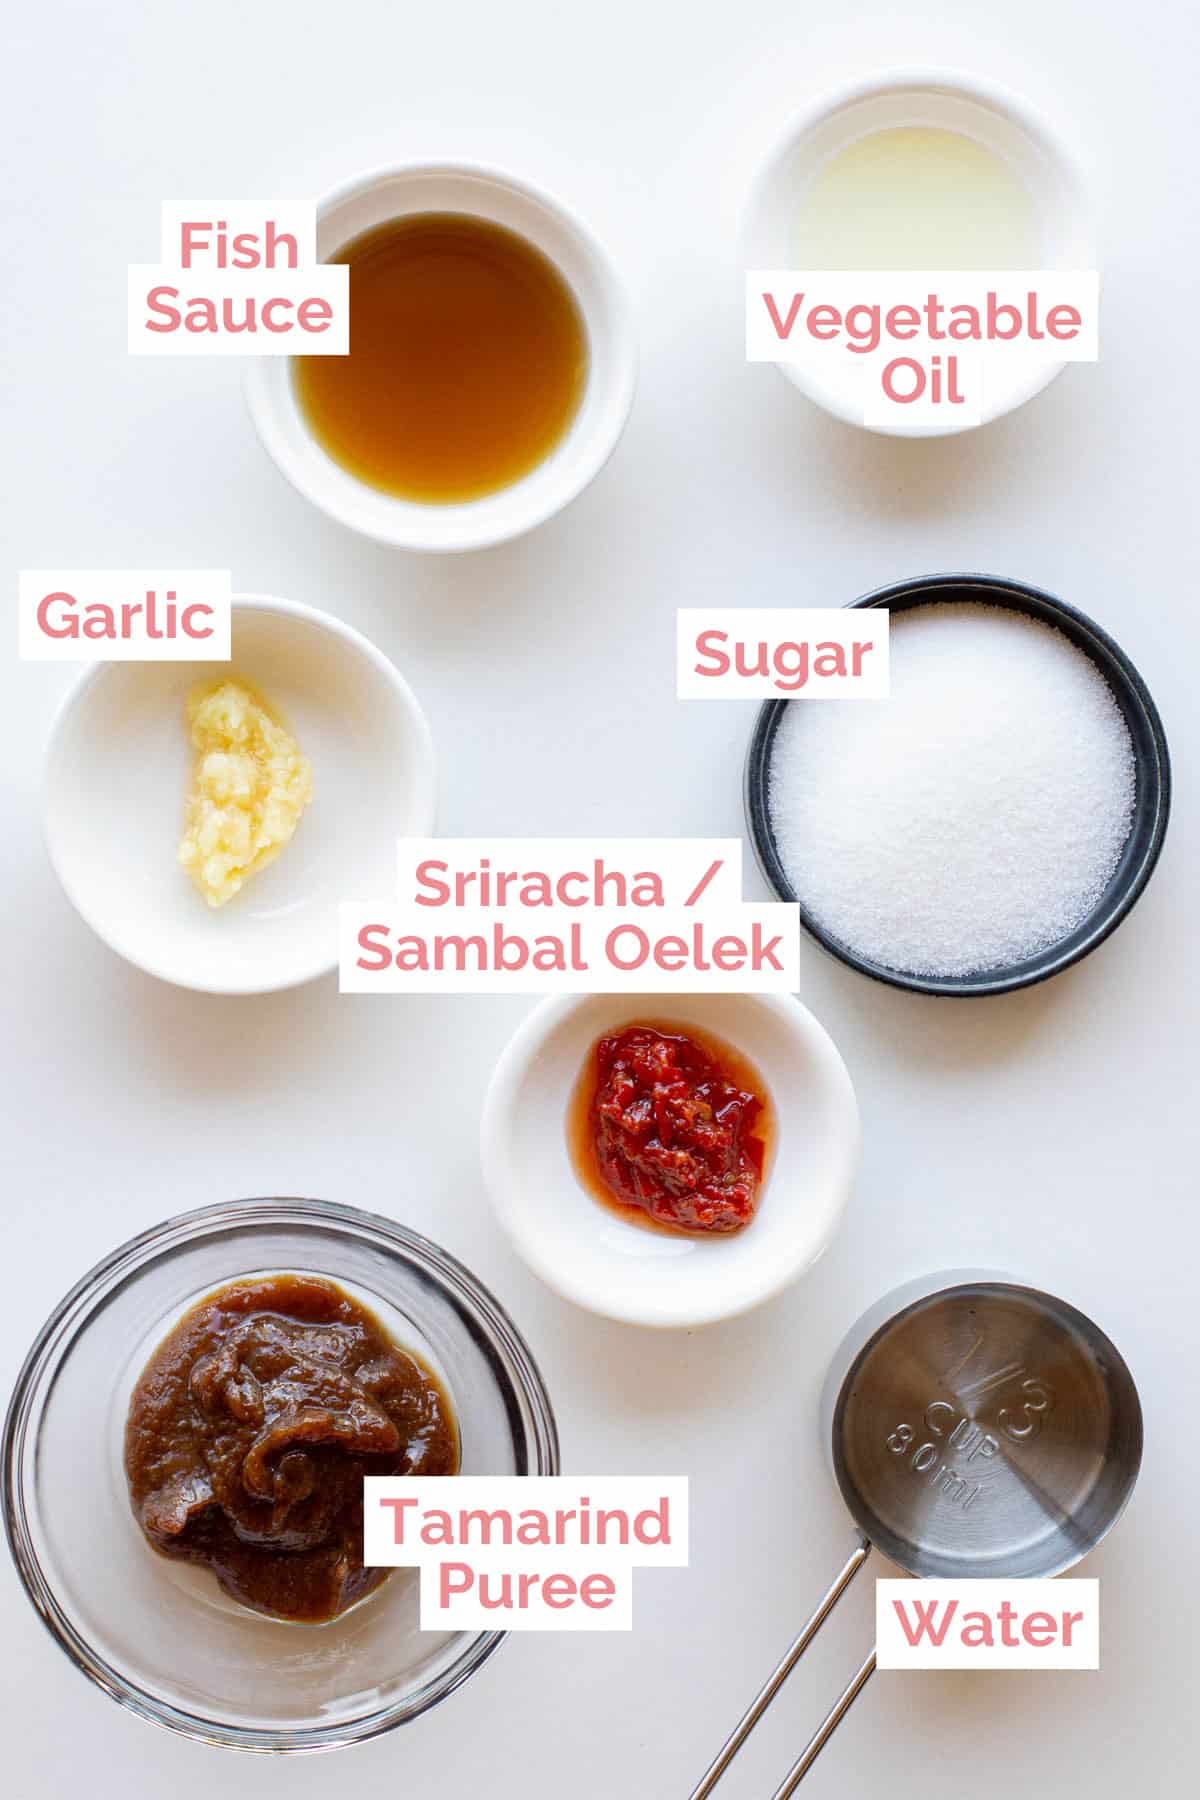 Ingredients laid out to make tamarind sauce.